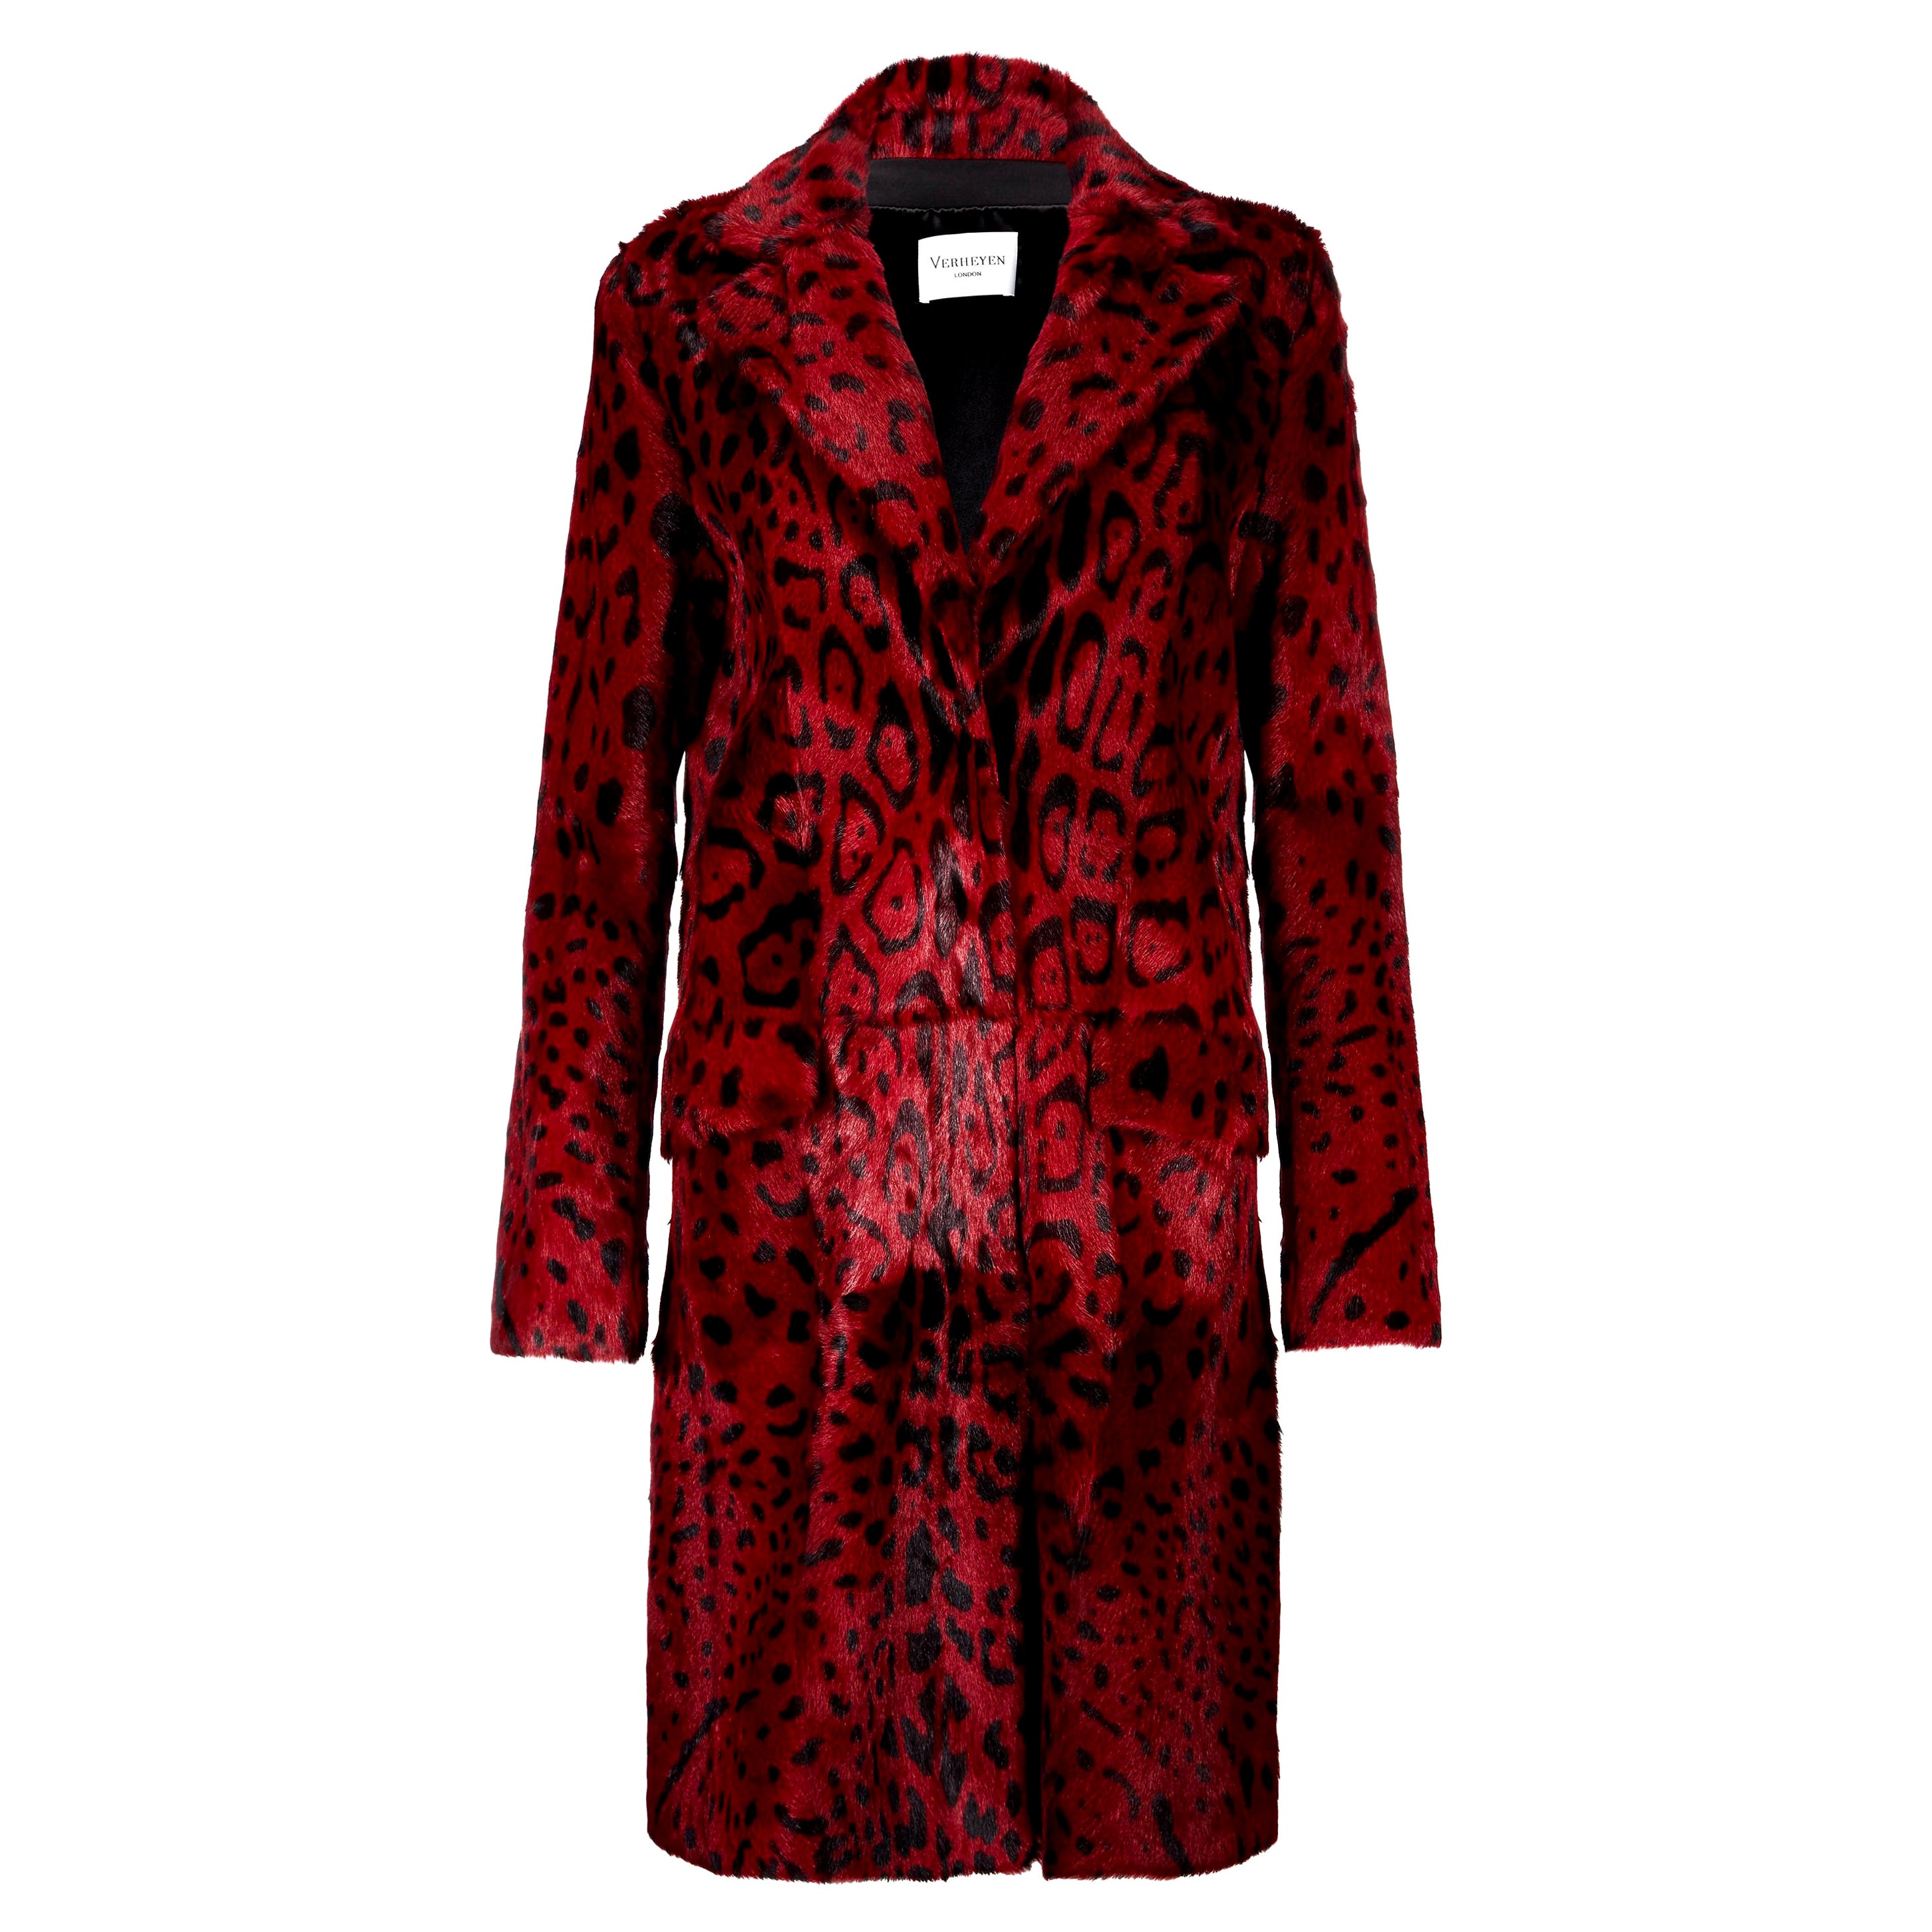 Verheyen London Leopard Print Coat in Red Ruby Goat Hair Fur UK 10 For Sale